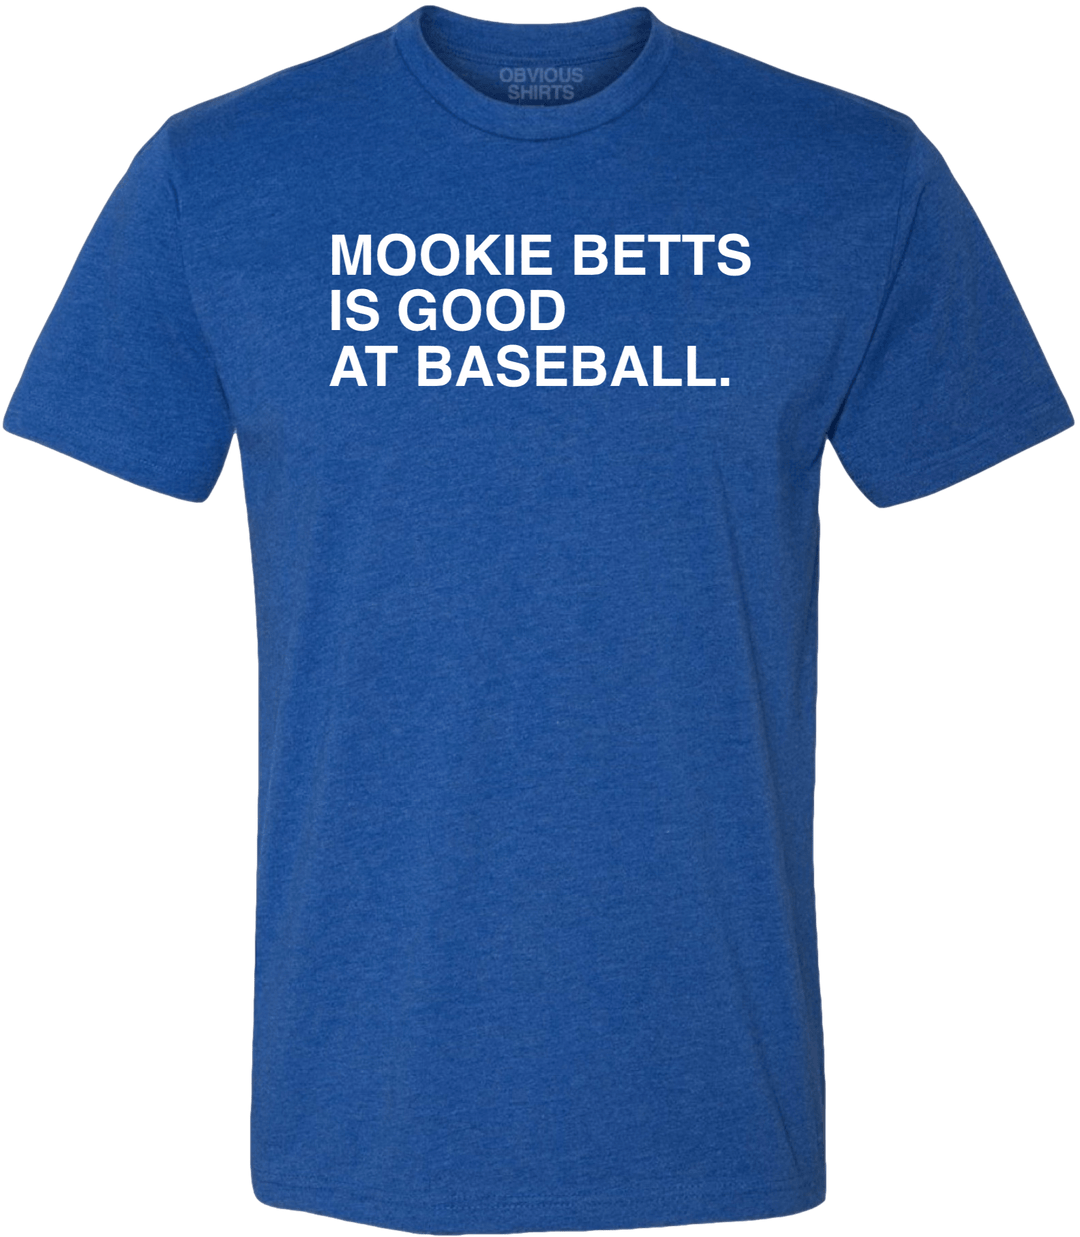 MOOKIE BETTS IS GOOD AT BASEBALL. - OBVIOUS SHIRTS.